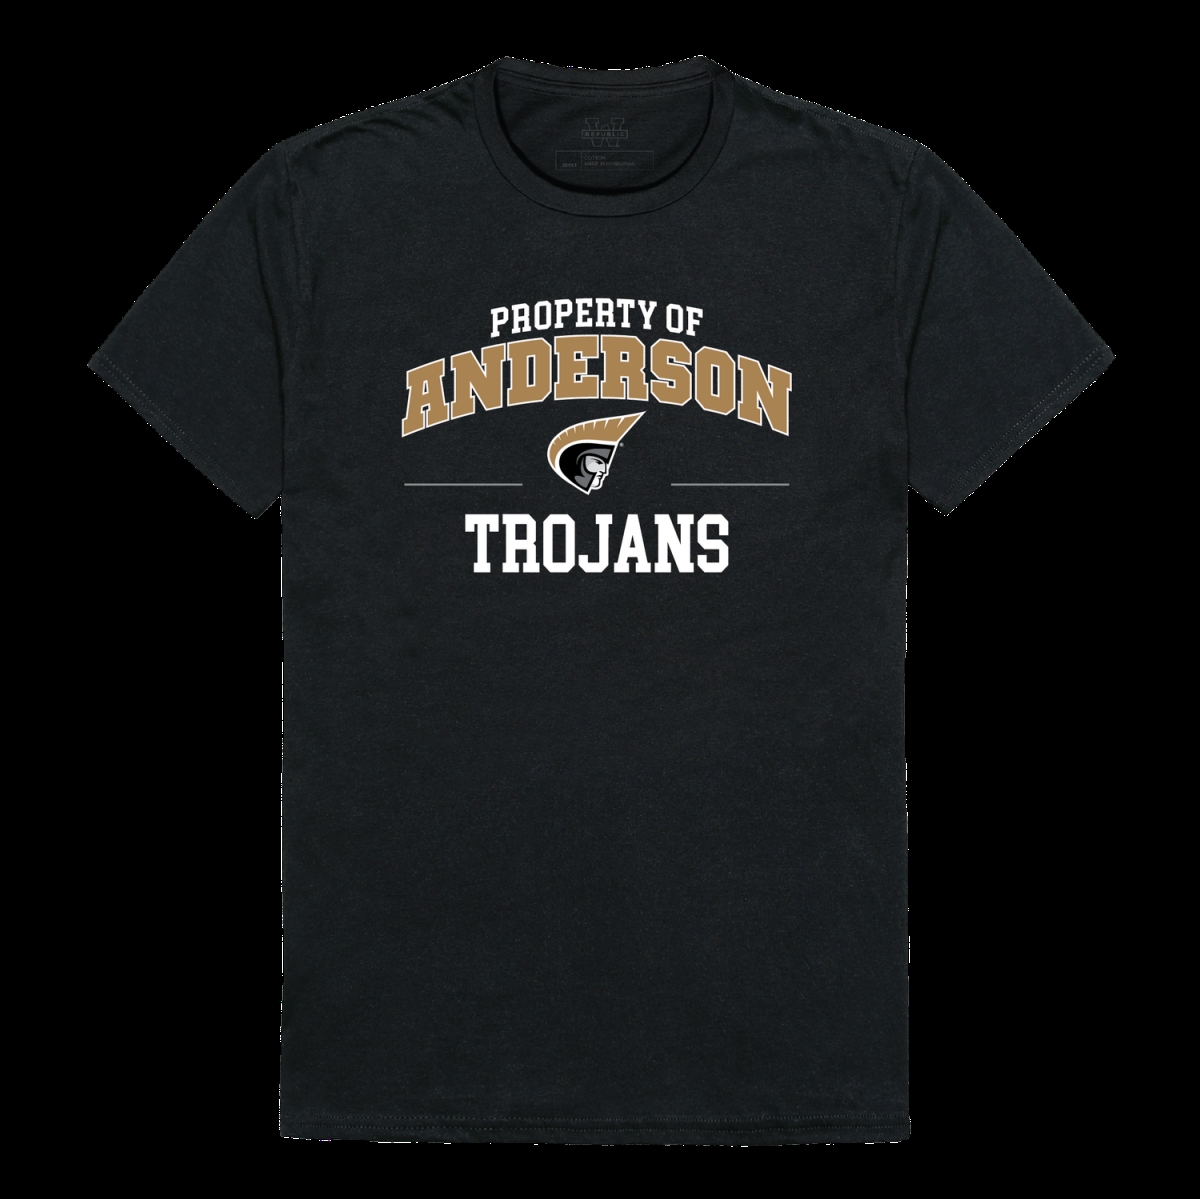 W Republic 517-691-BLK-01 Anderson University Trojans Property College T-Shirt&#44; Black - Small